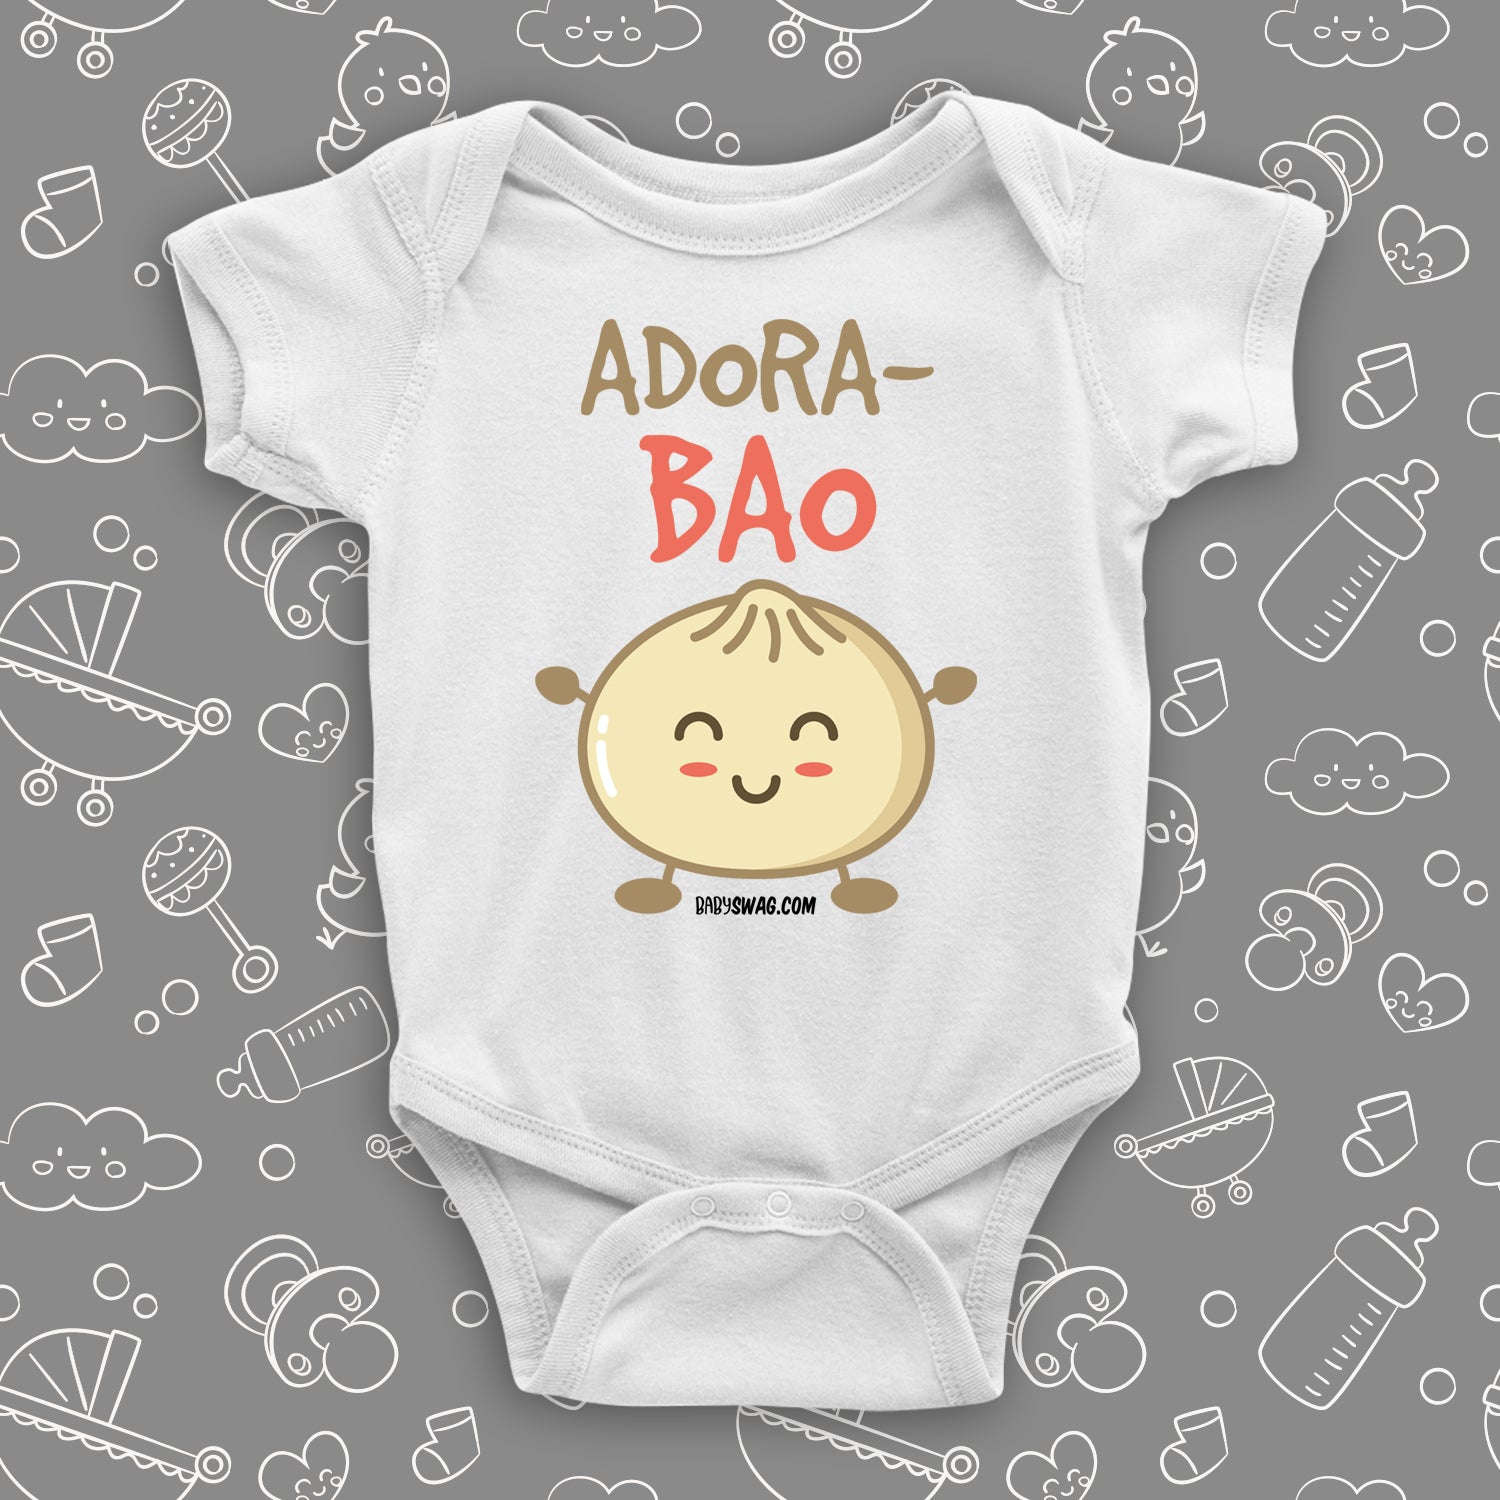 Cute baby onesies wuth saying "Adora-Bao" in white.